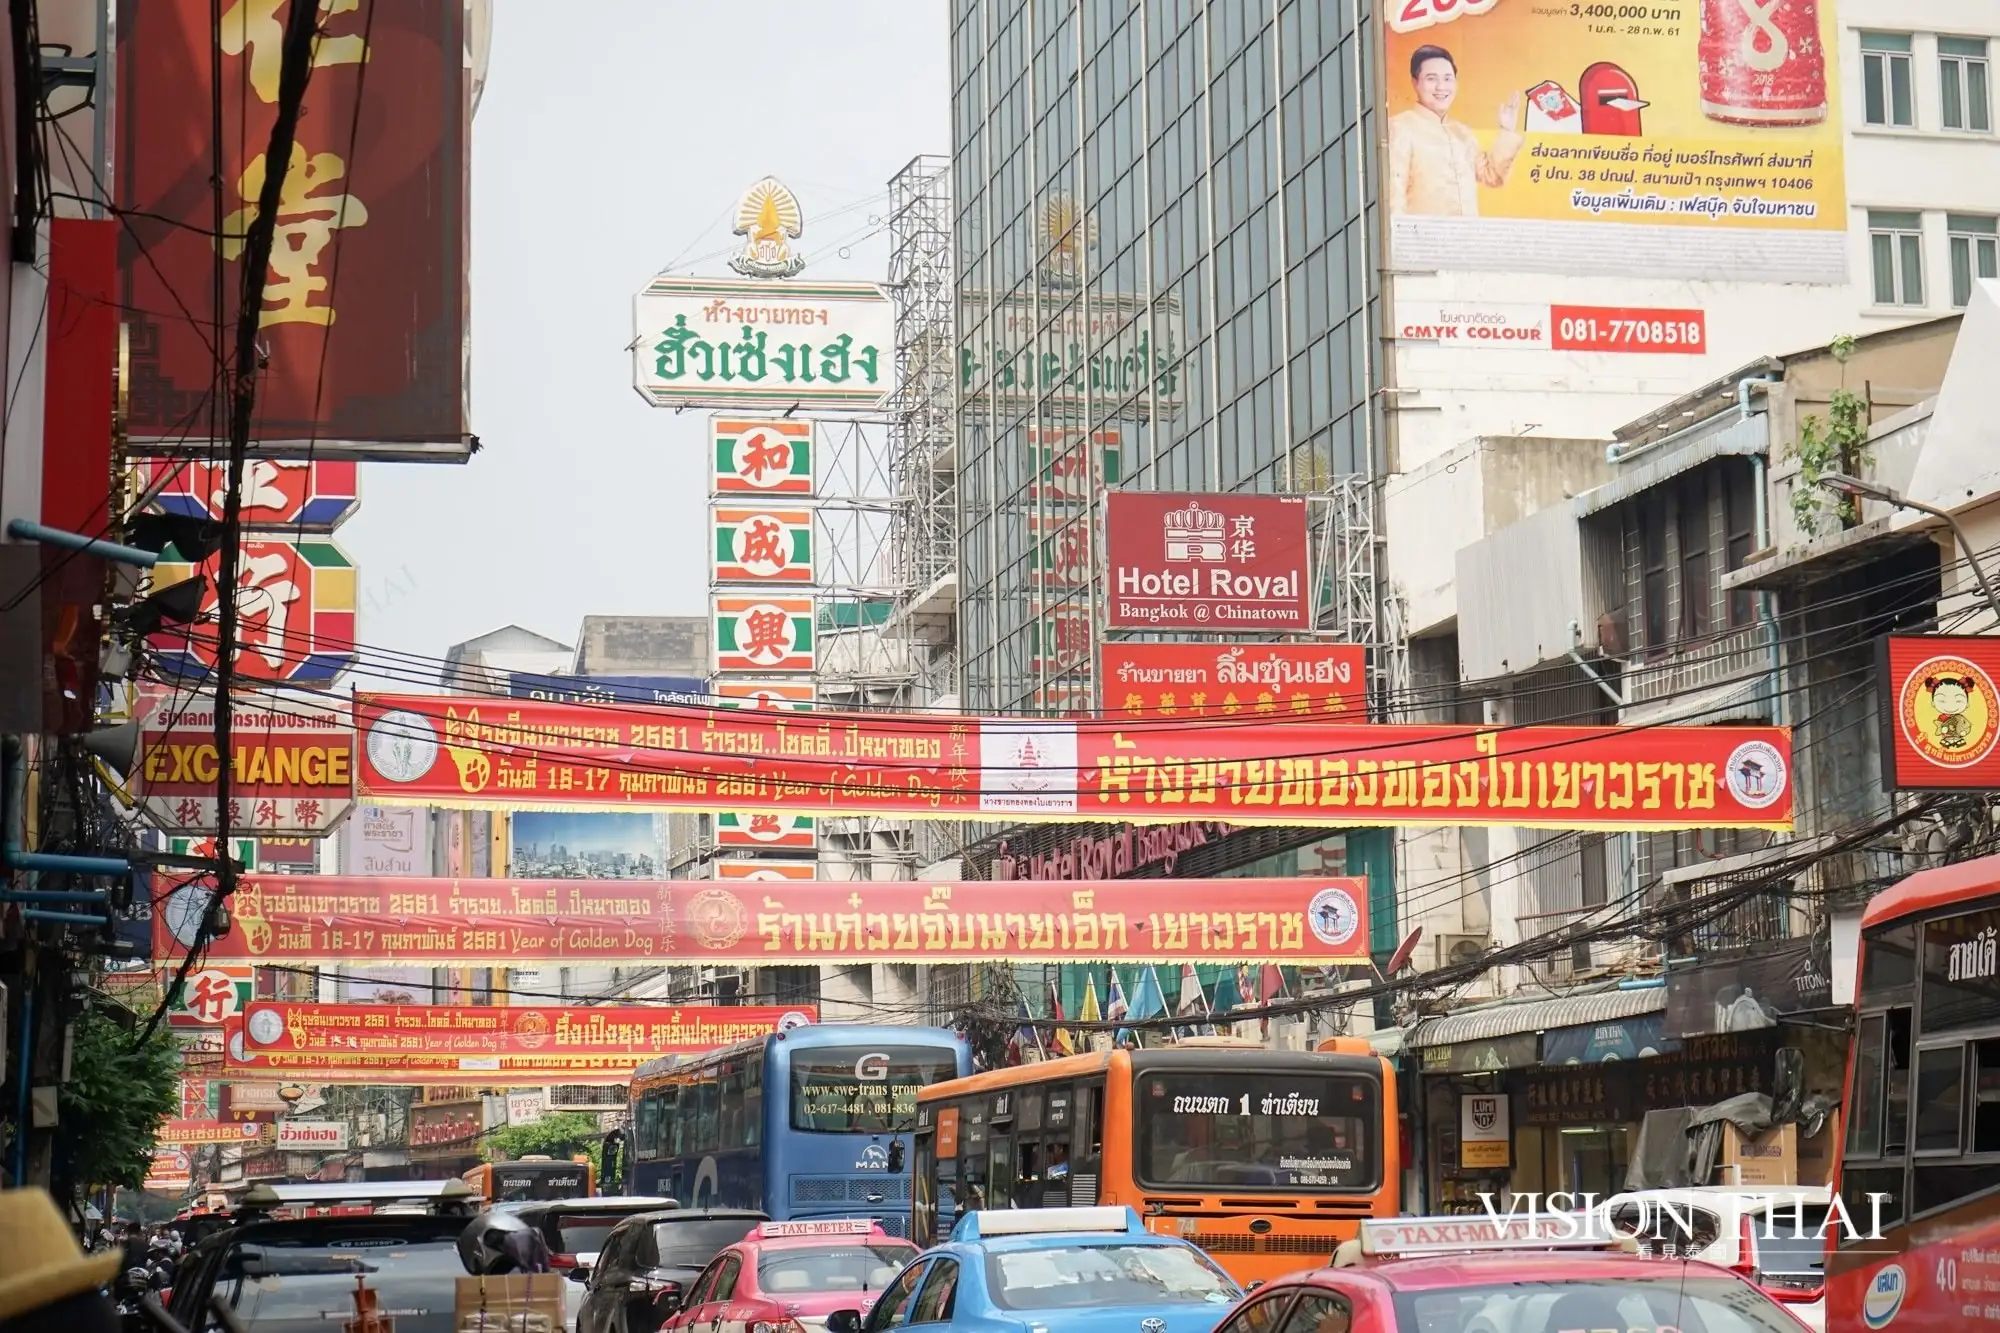 曼谷中国城 Chinatown 体验泰式中国风